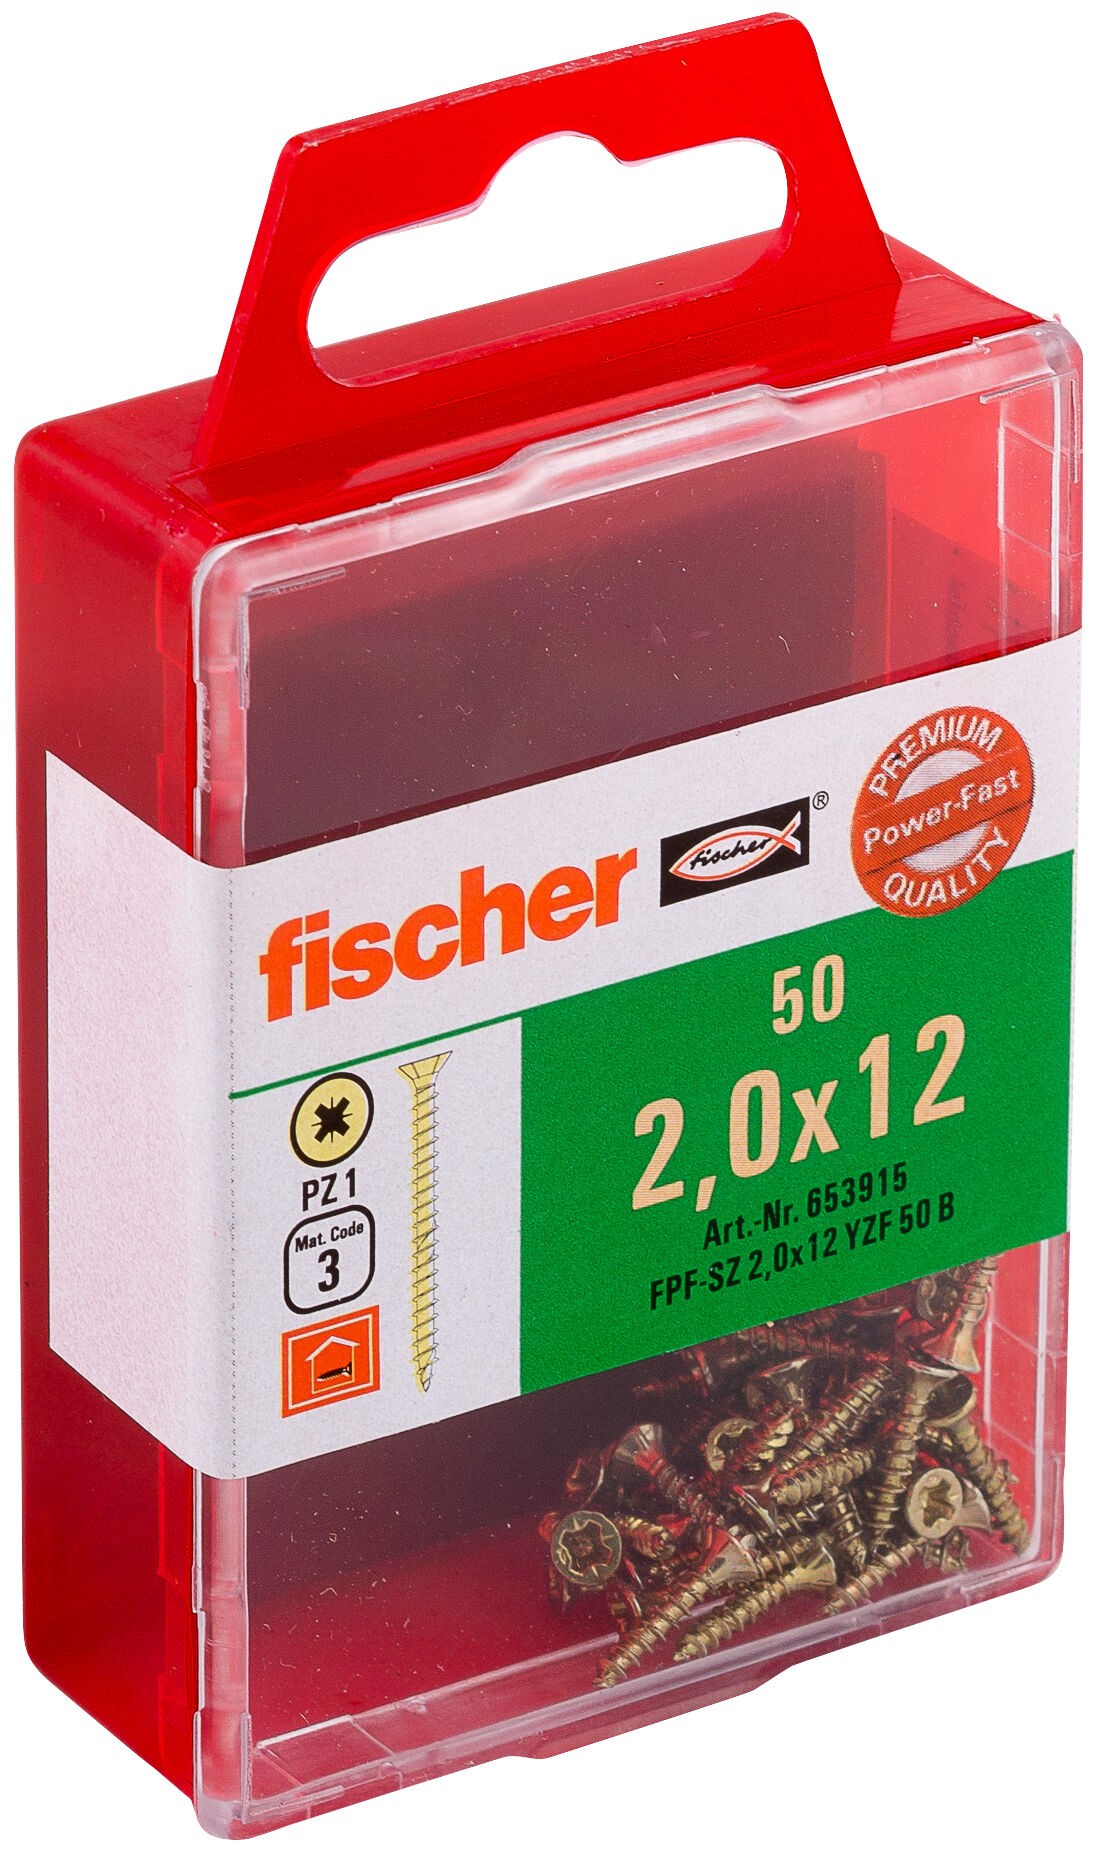 Саморез потай 2х12 мм Fischer FPF-SZ YZF 653915, полная резьба, желтый цинк (50 шт) - фото